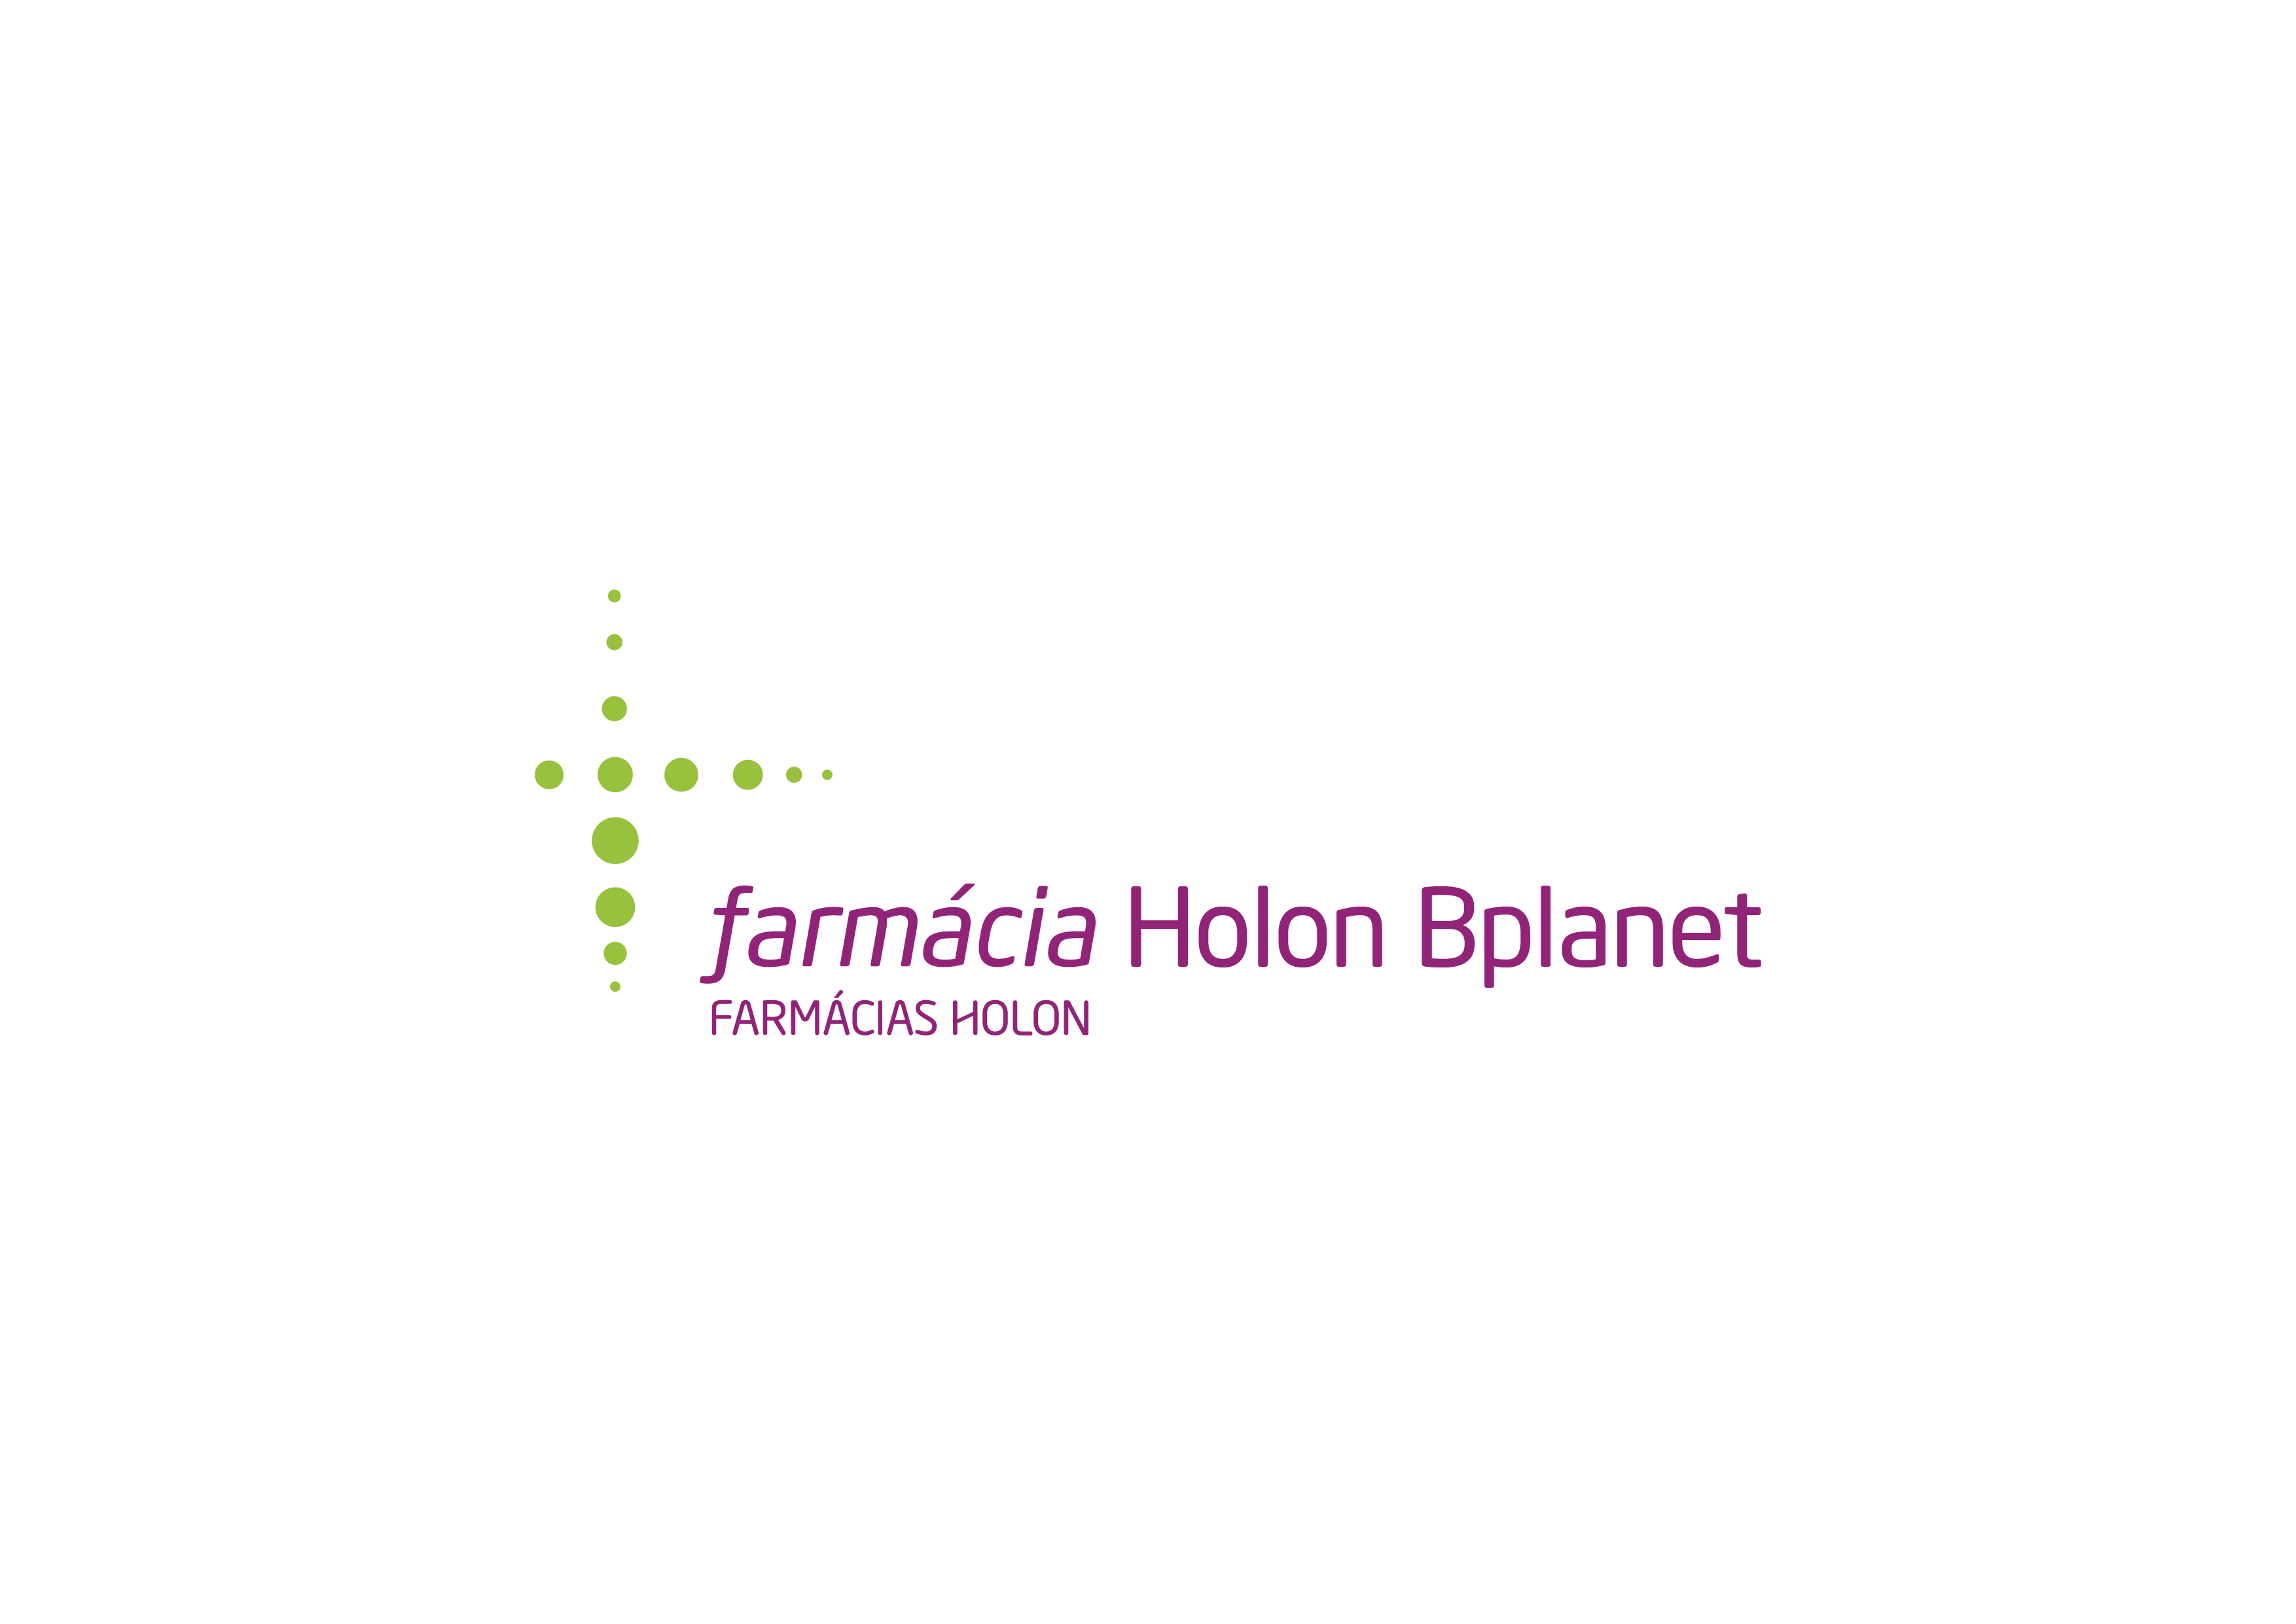 FARMACIA HOLON BPLANET